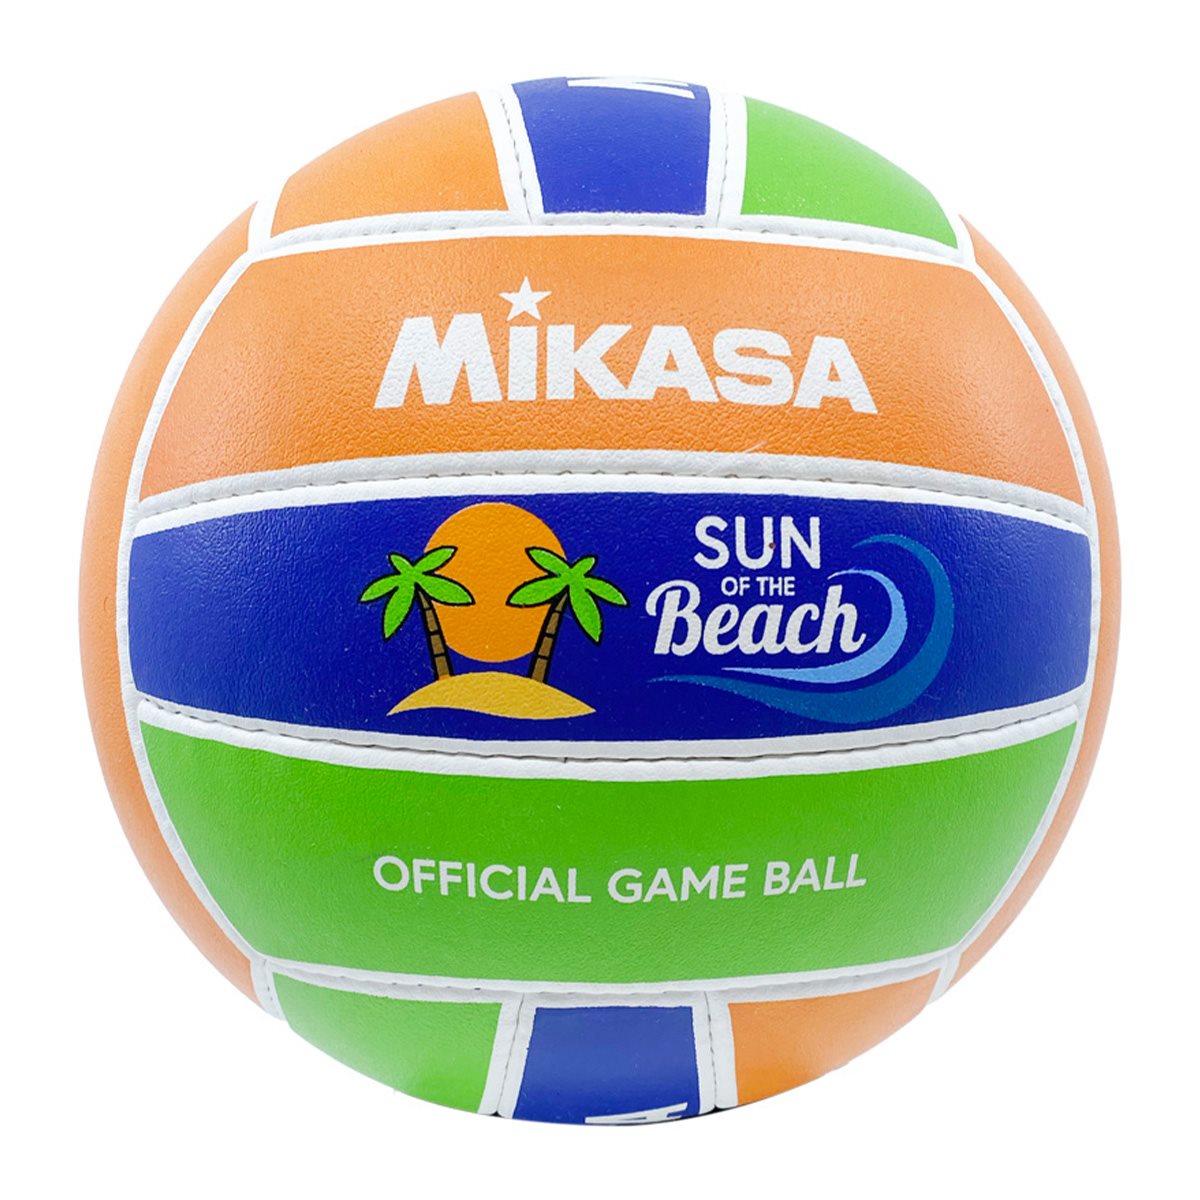 MIKASA SUN OF THE BEACH VOLLEYBALL